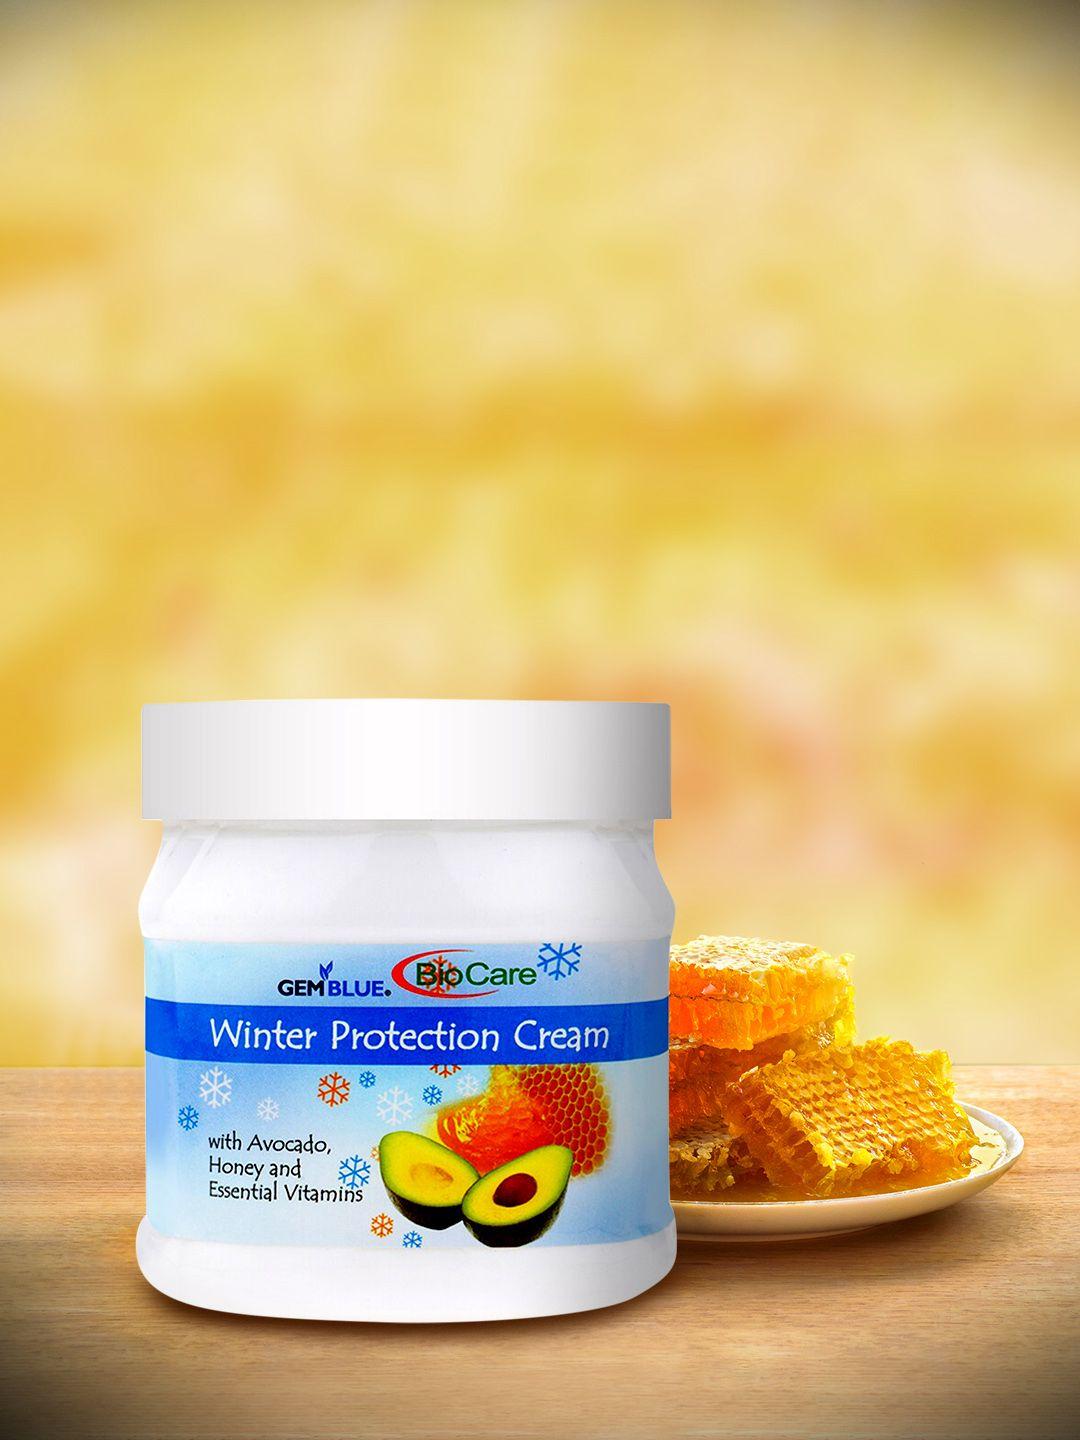 gemblue biocare winter protection face & body cream 500 ml